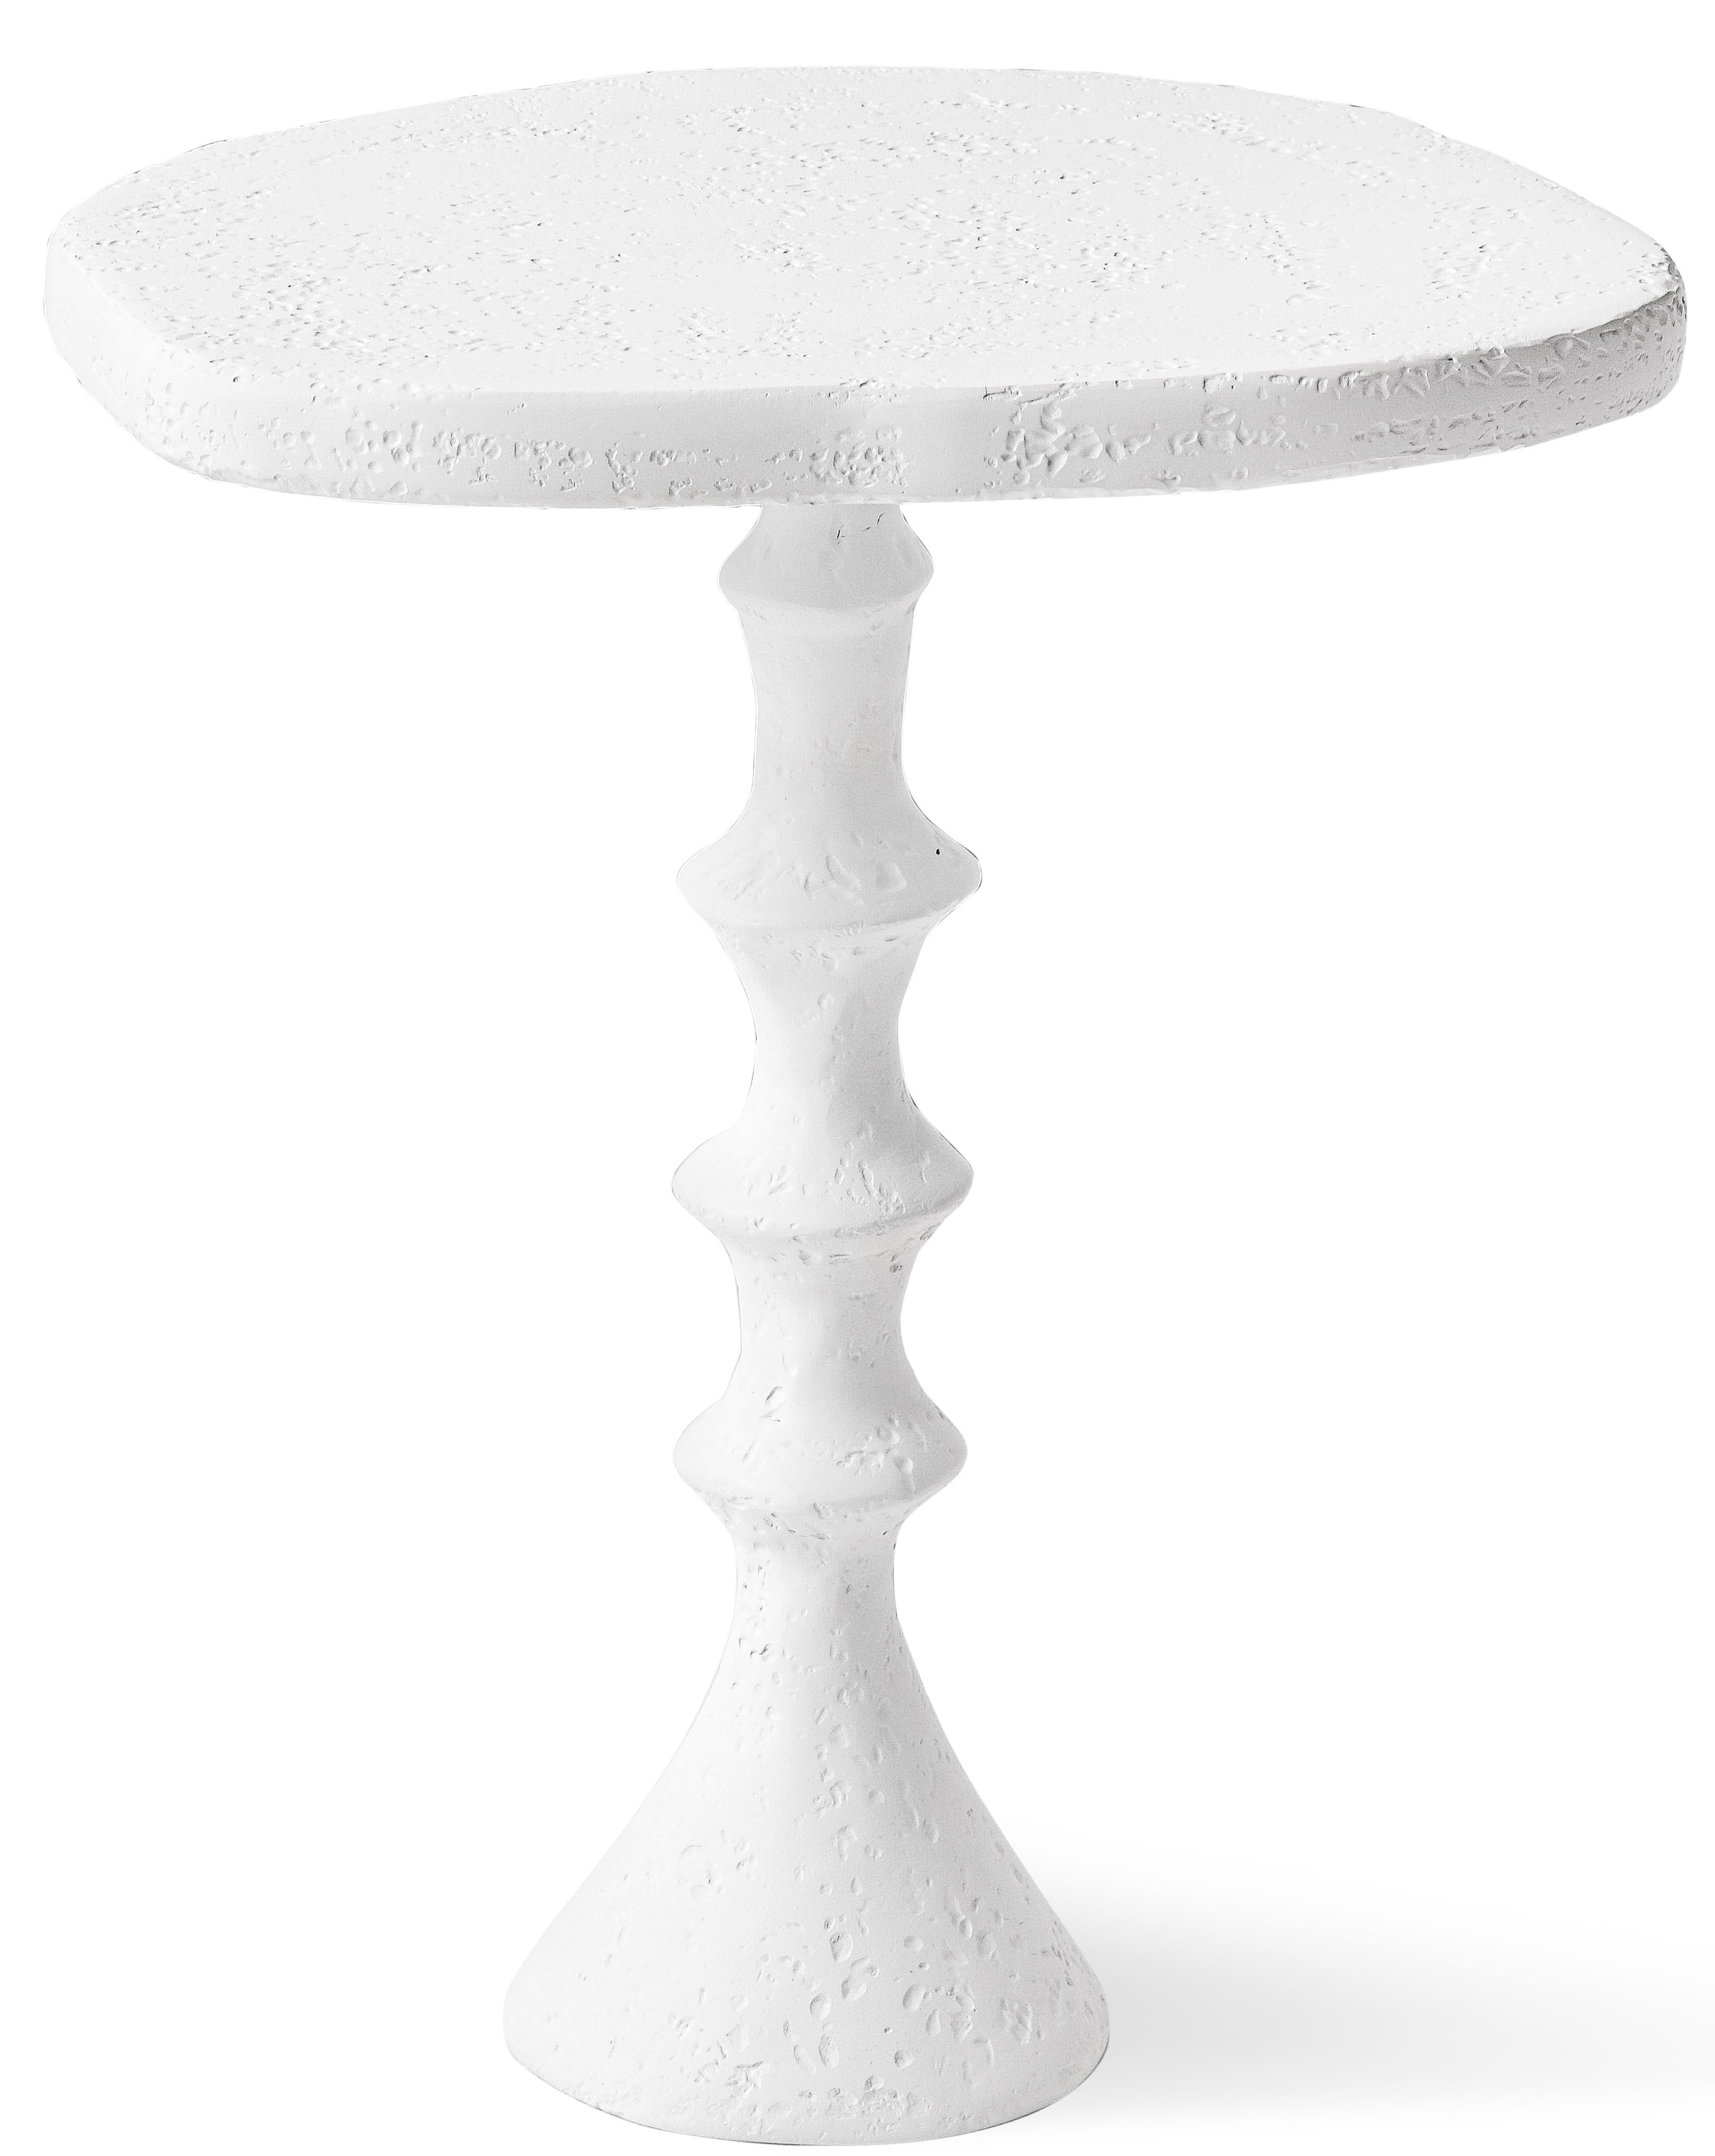 Pair of St Paul Plaster Side Table by Bourgeois Boheme Atelier 'Petit Modèle' For Sale 2